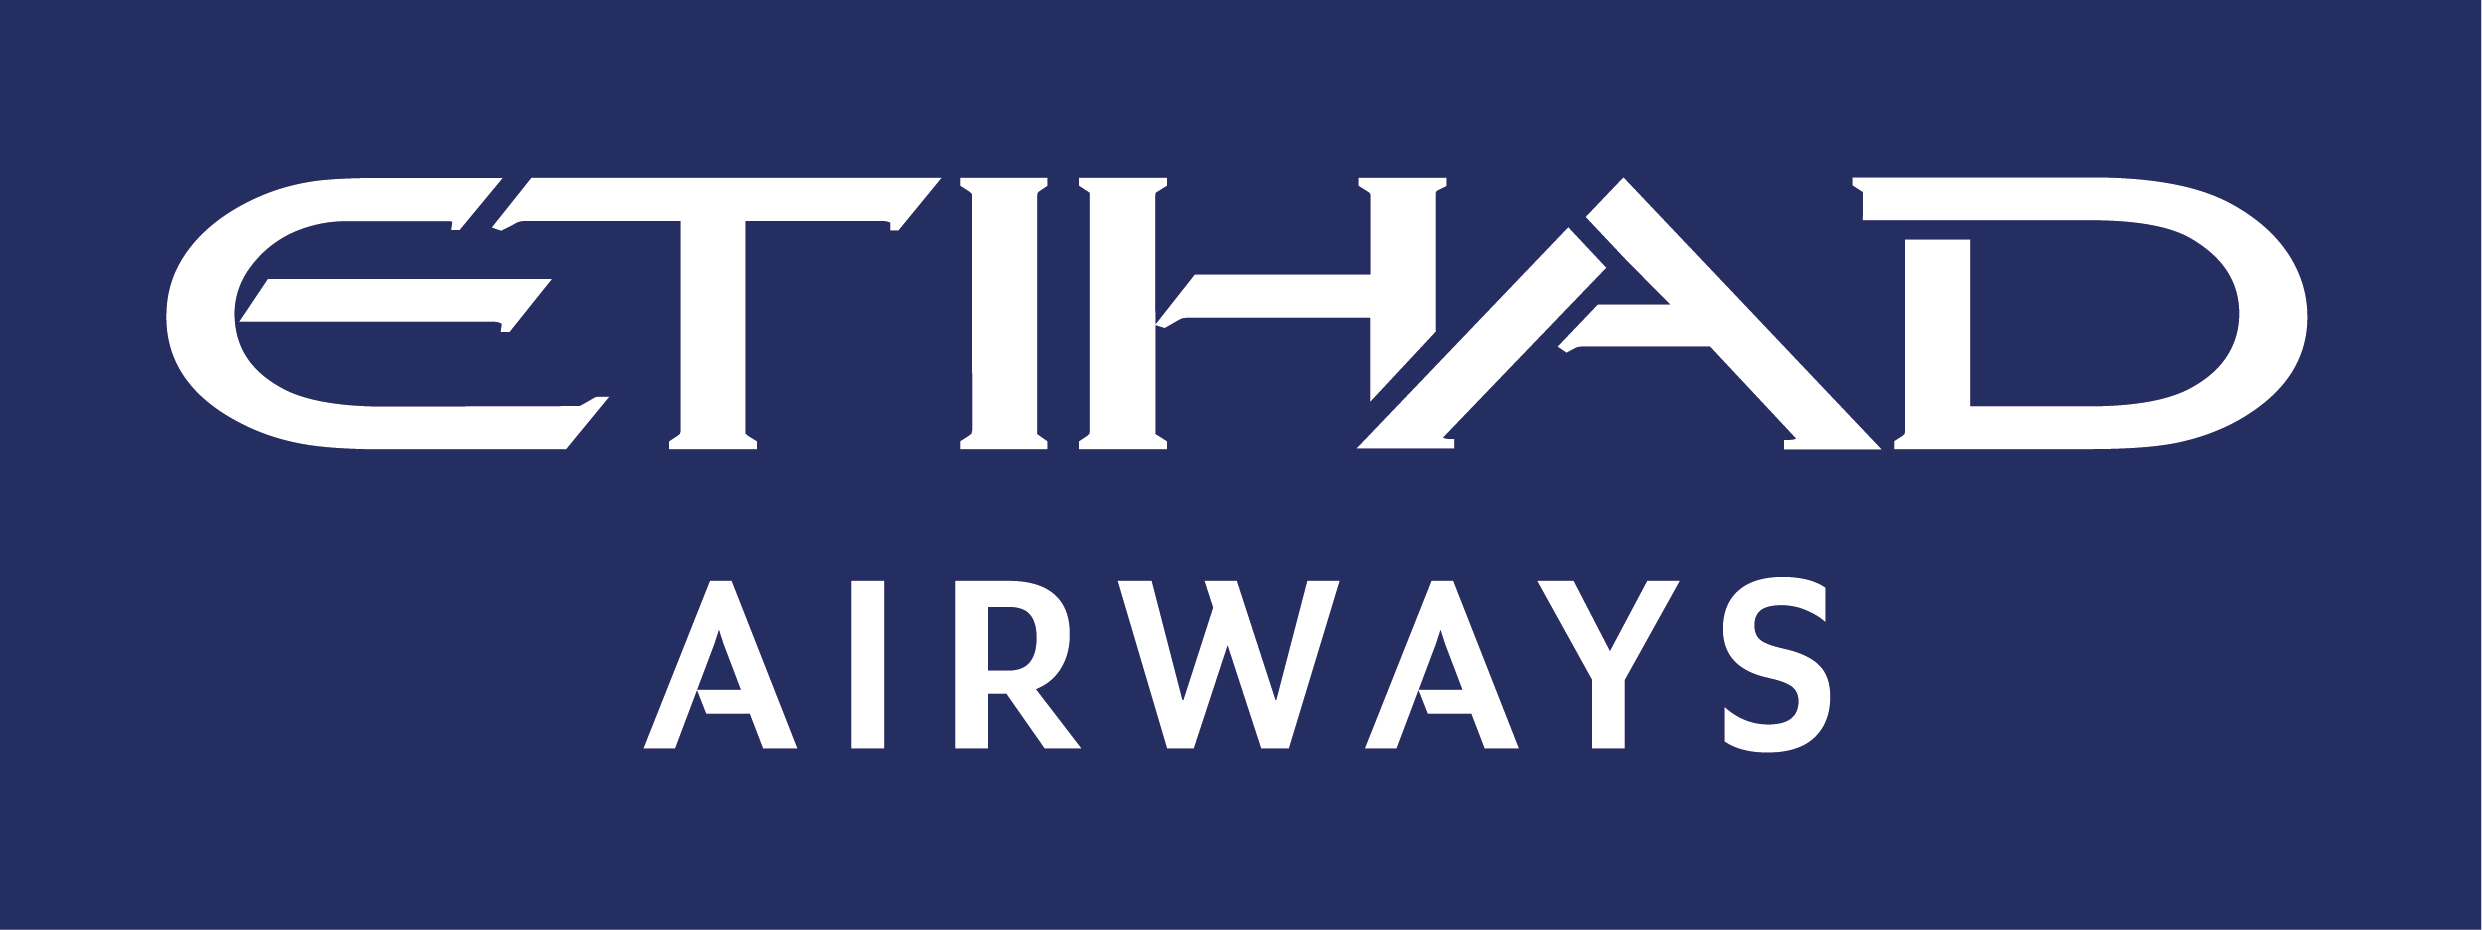 etihad airways logo man city